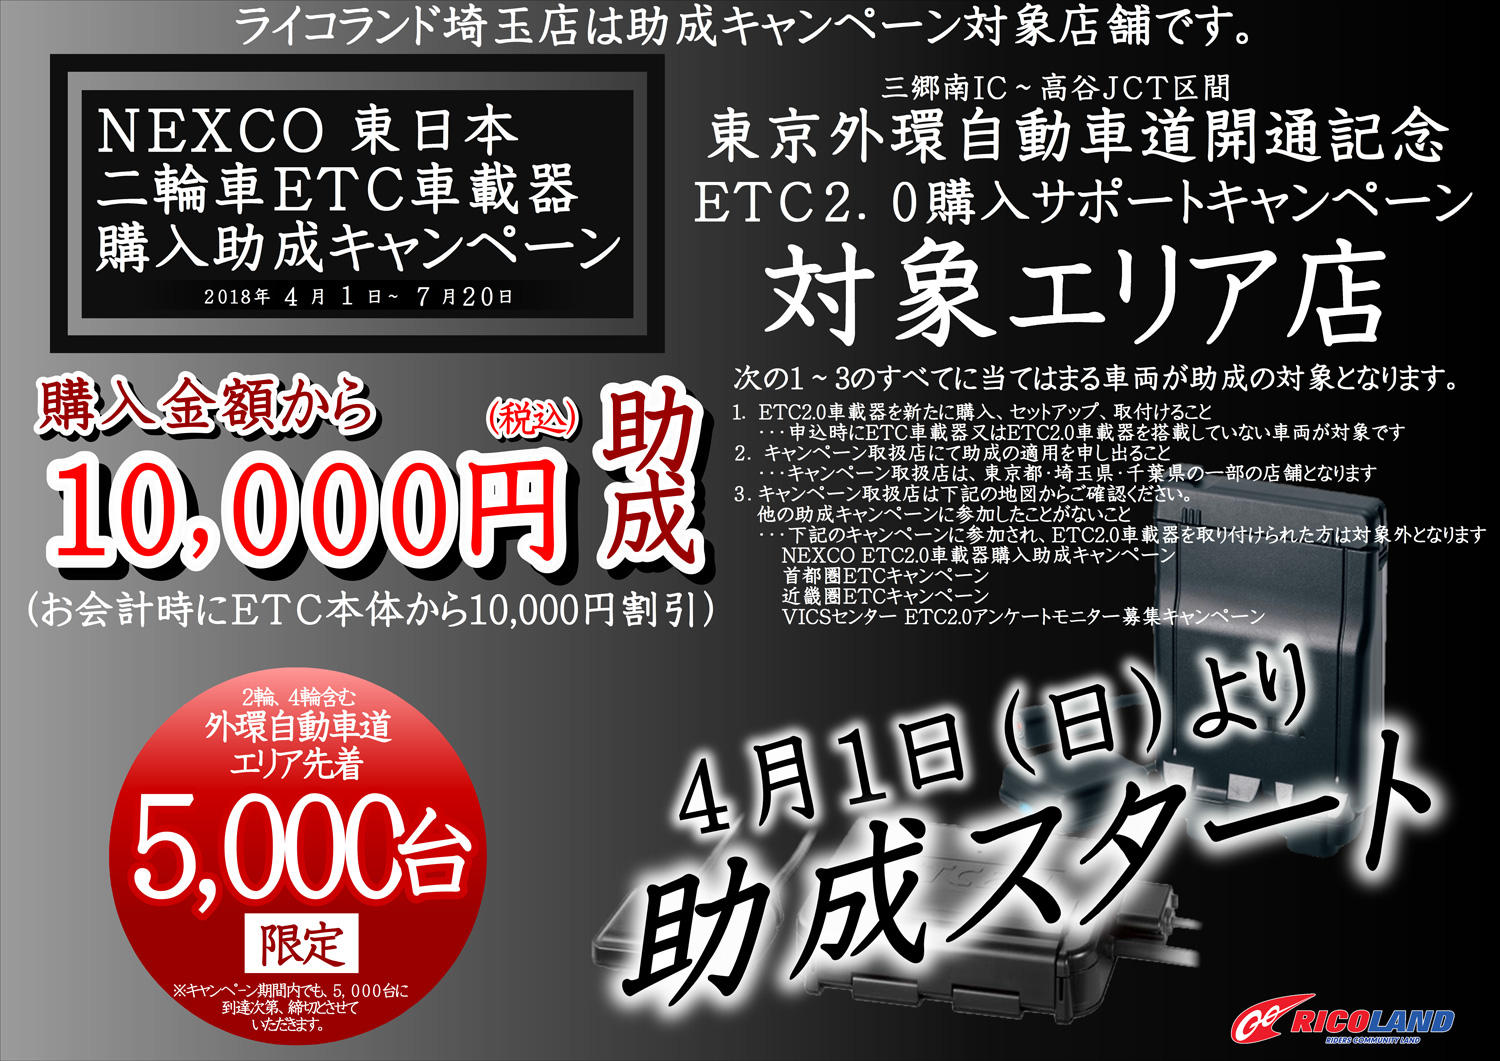 http://www.ricoland.co.jp/shopinfo/saitama/information/ETC201804.jpg